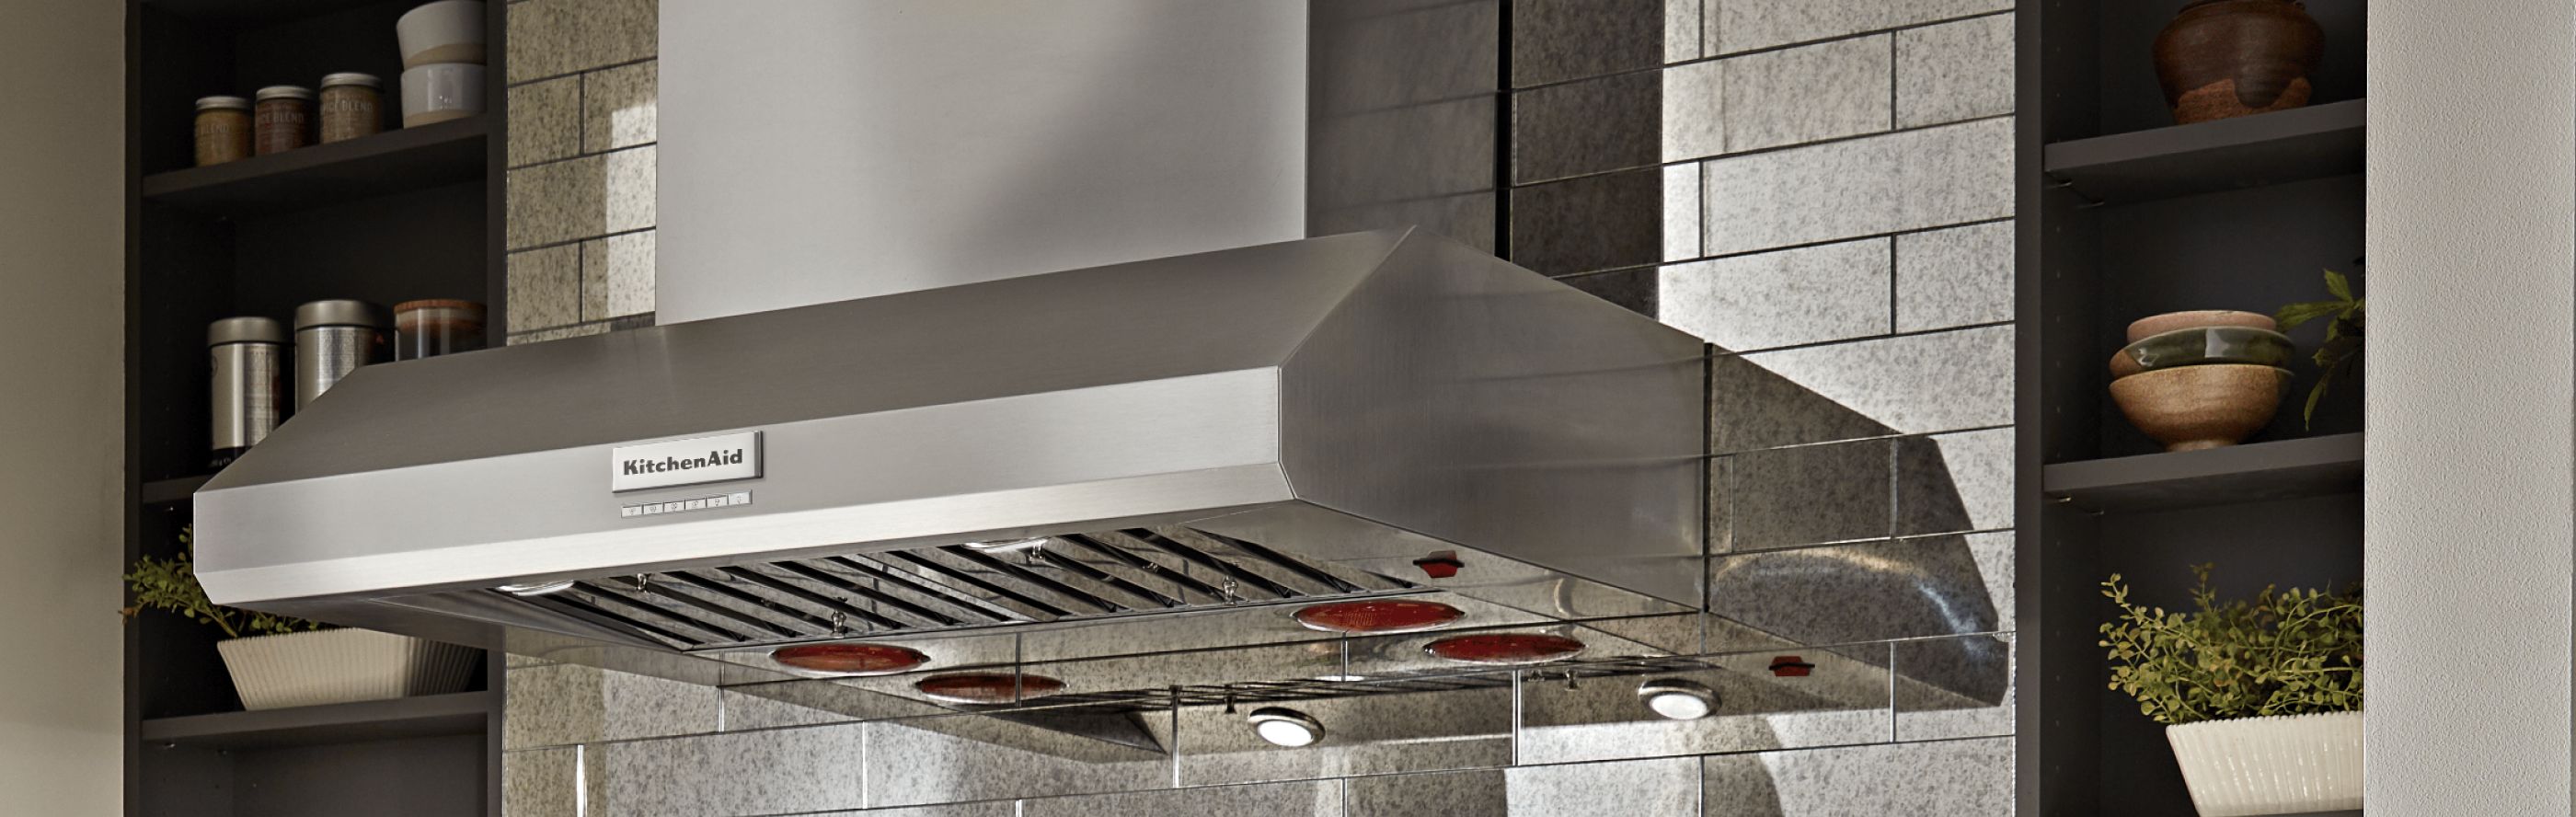 A KitchenAid® range hood against a backdrop of kitchen cabinets